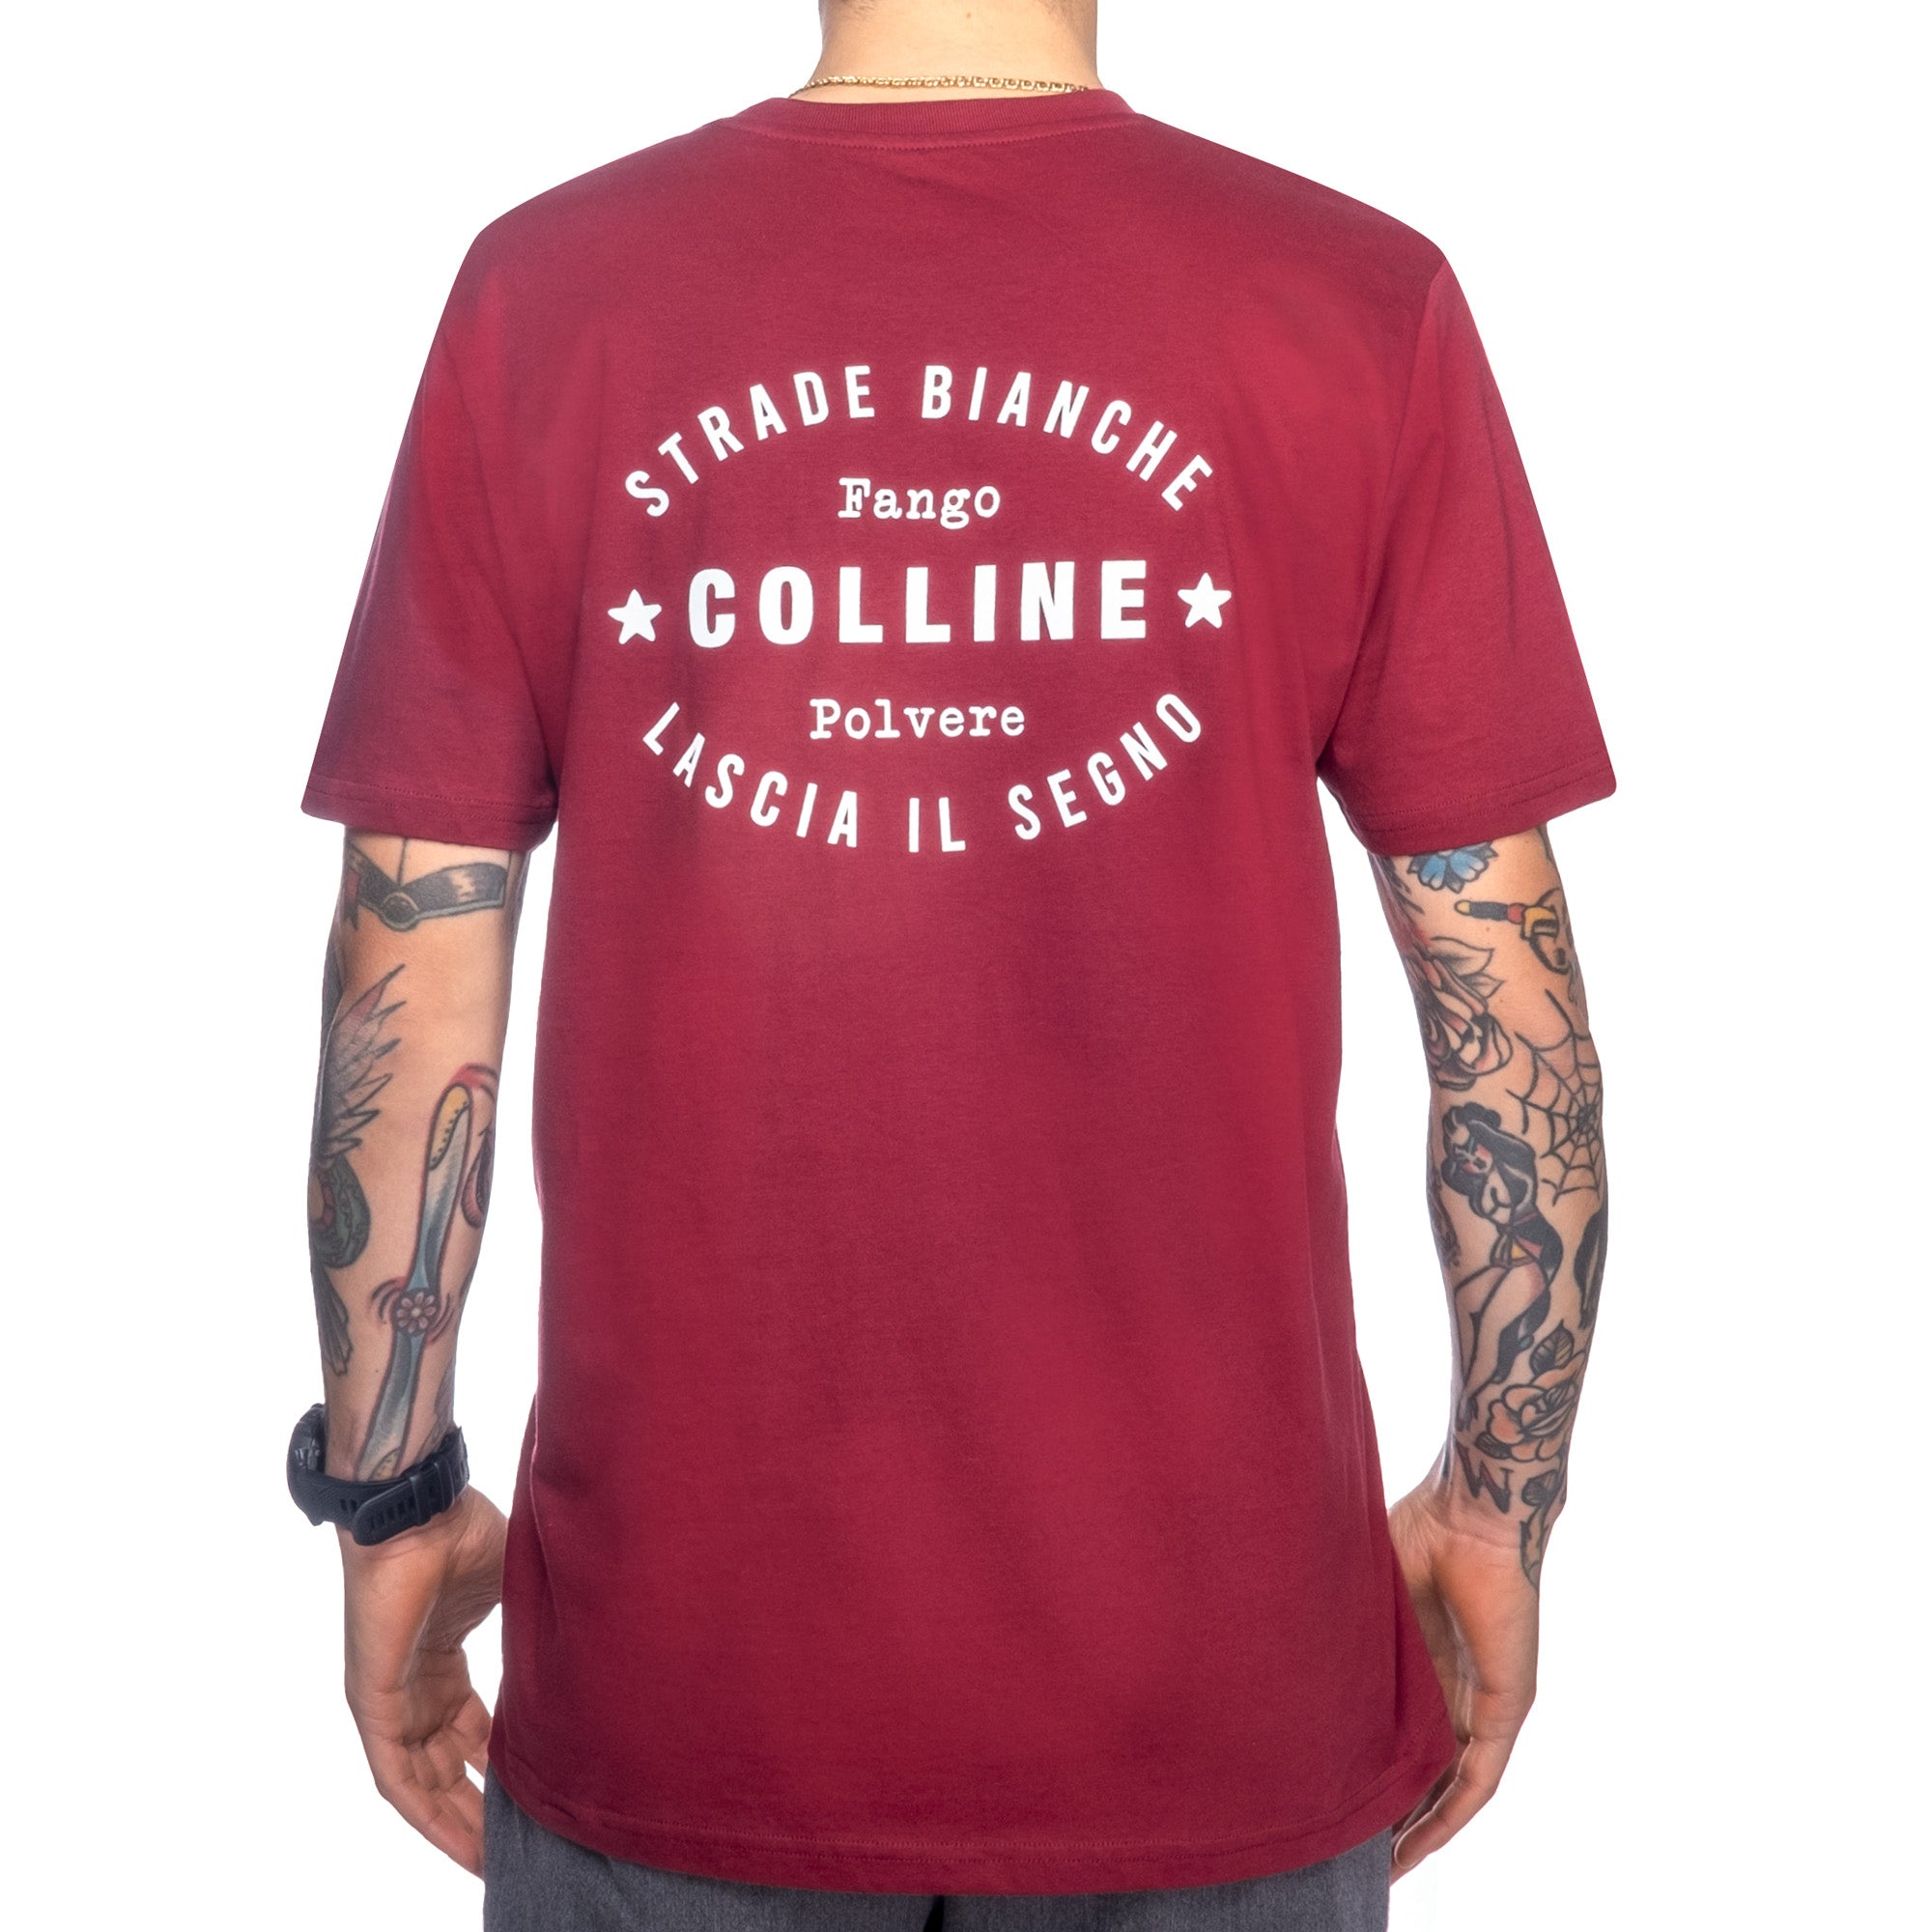 Camiseta Strade Bianche - Colinas